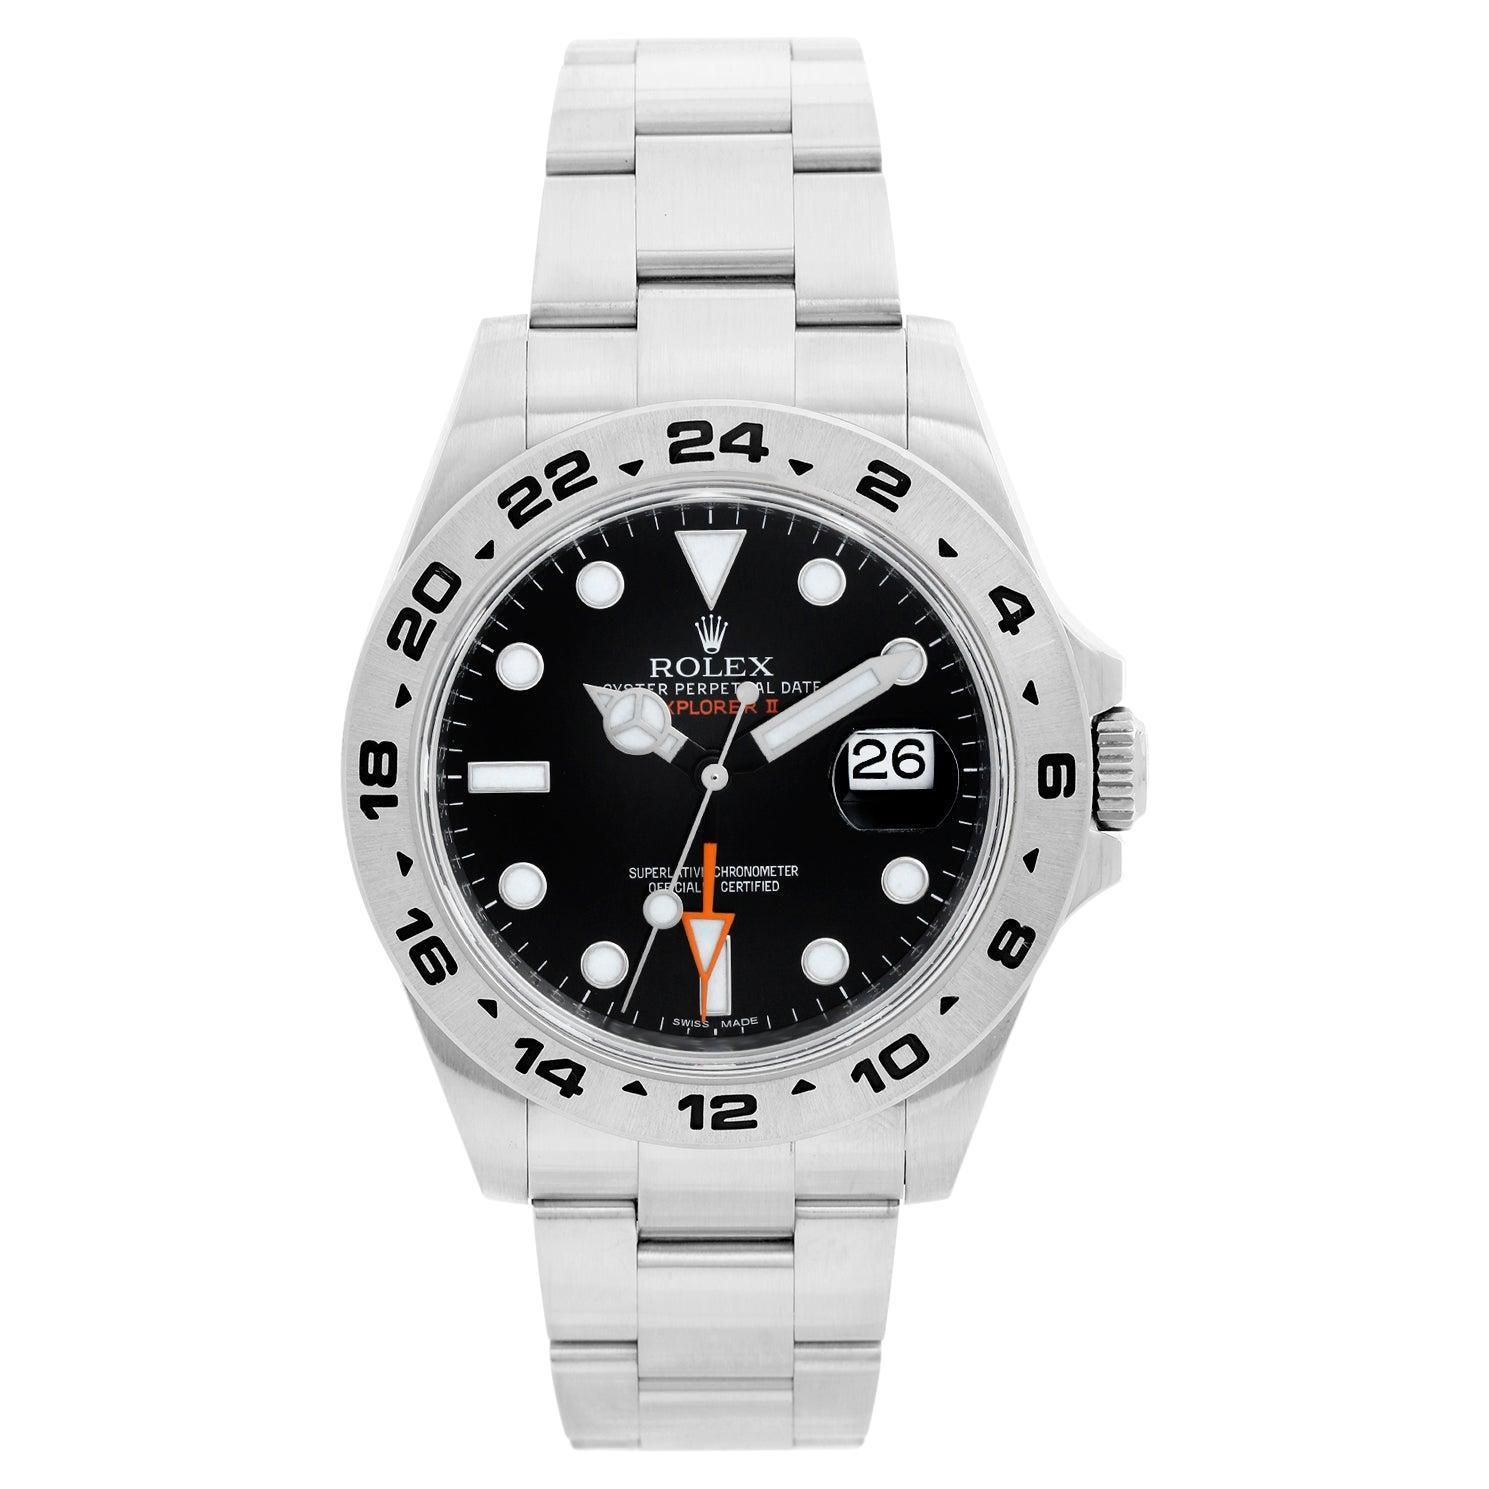 Rolex Explorer II Men's Stainless Steel Watch 216570  Black Dial with Date